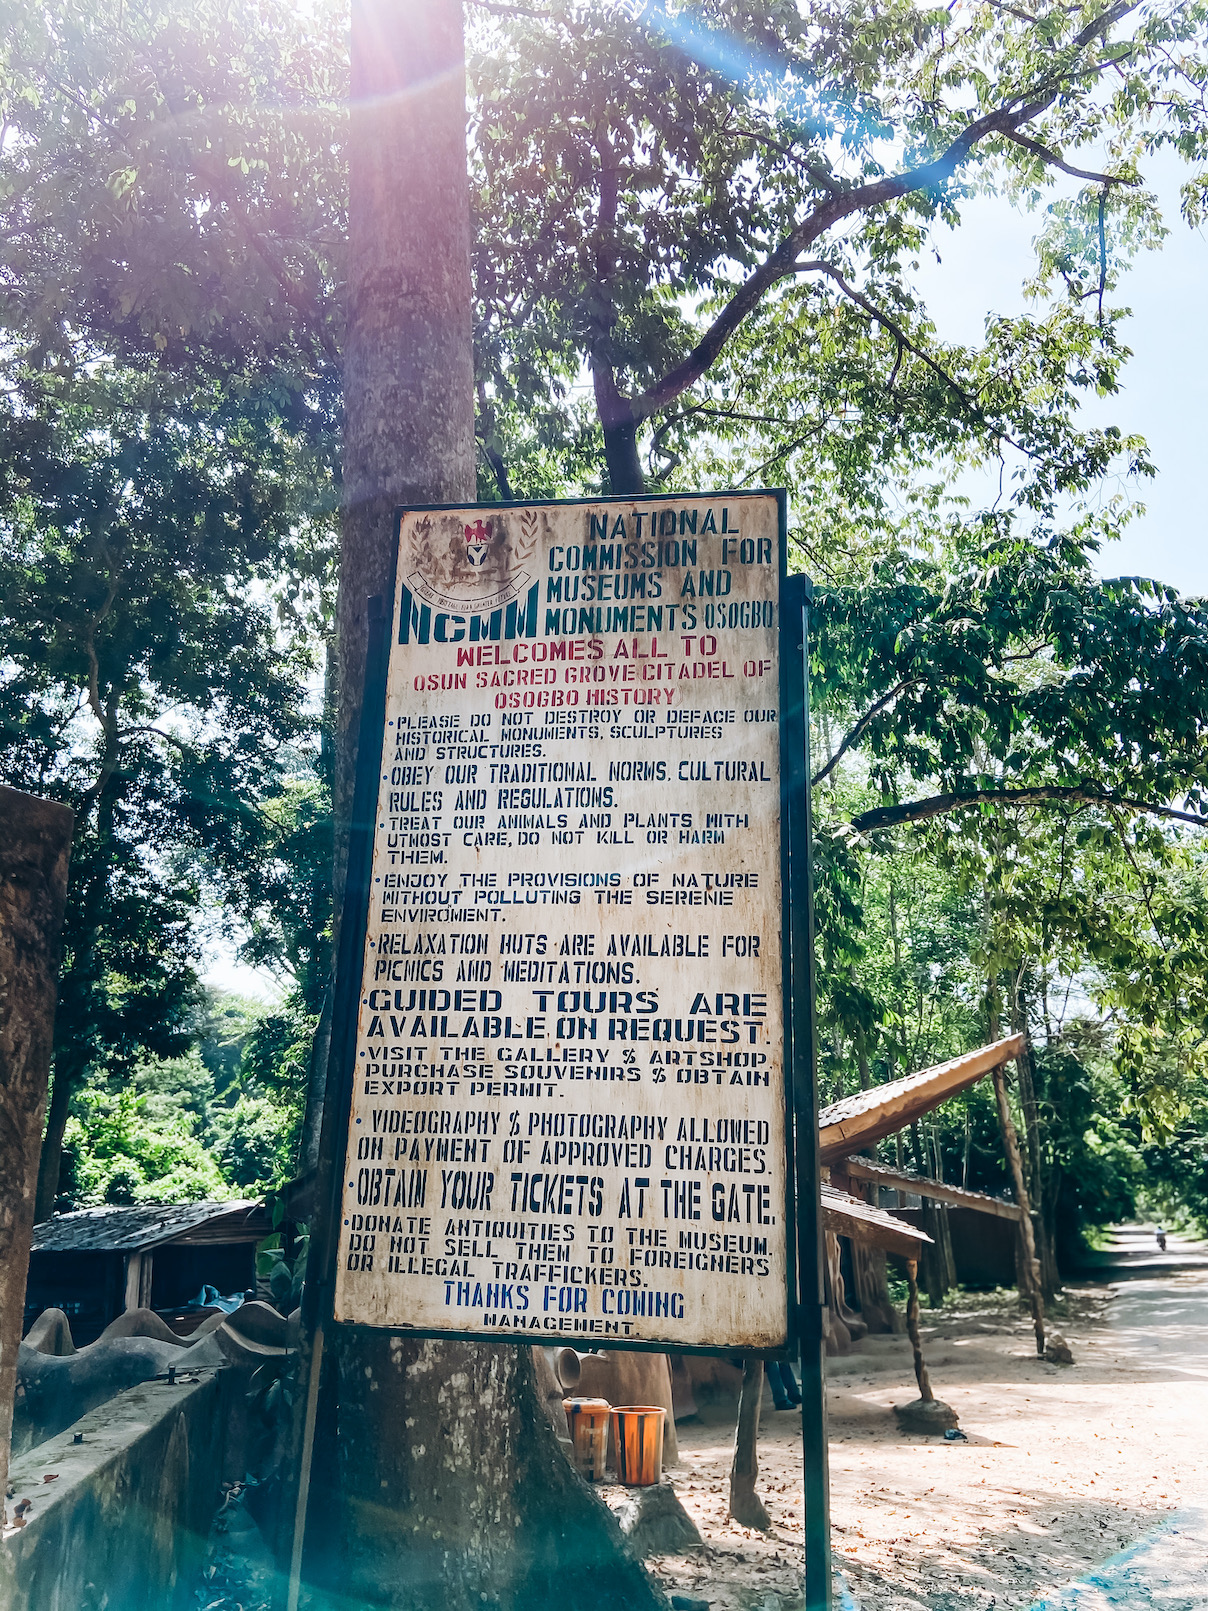 A signage at the osun osogbo grove